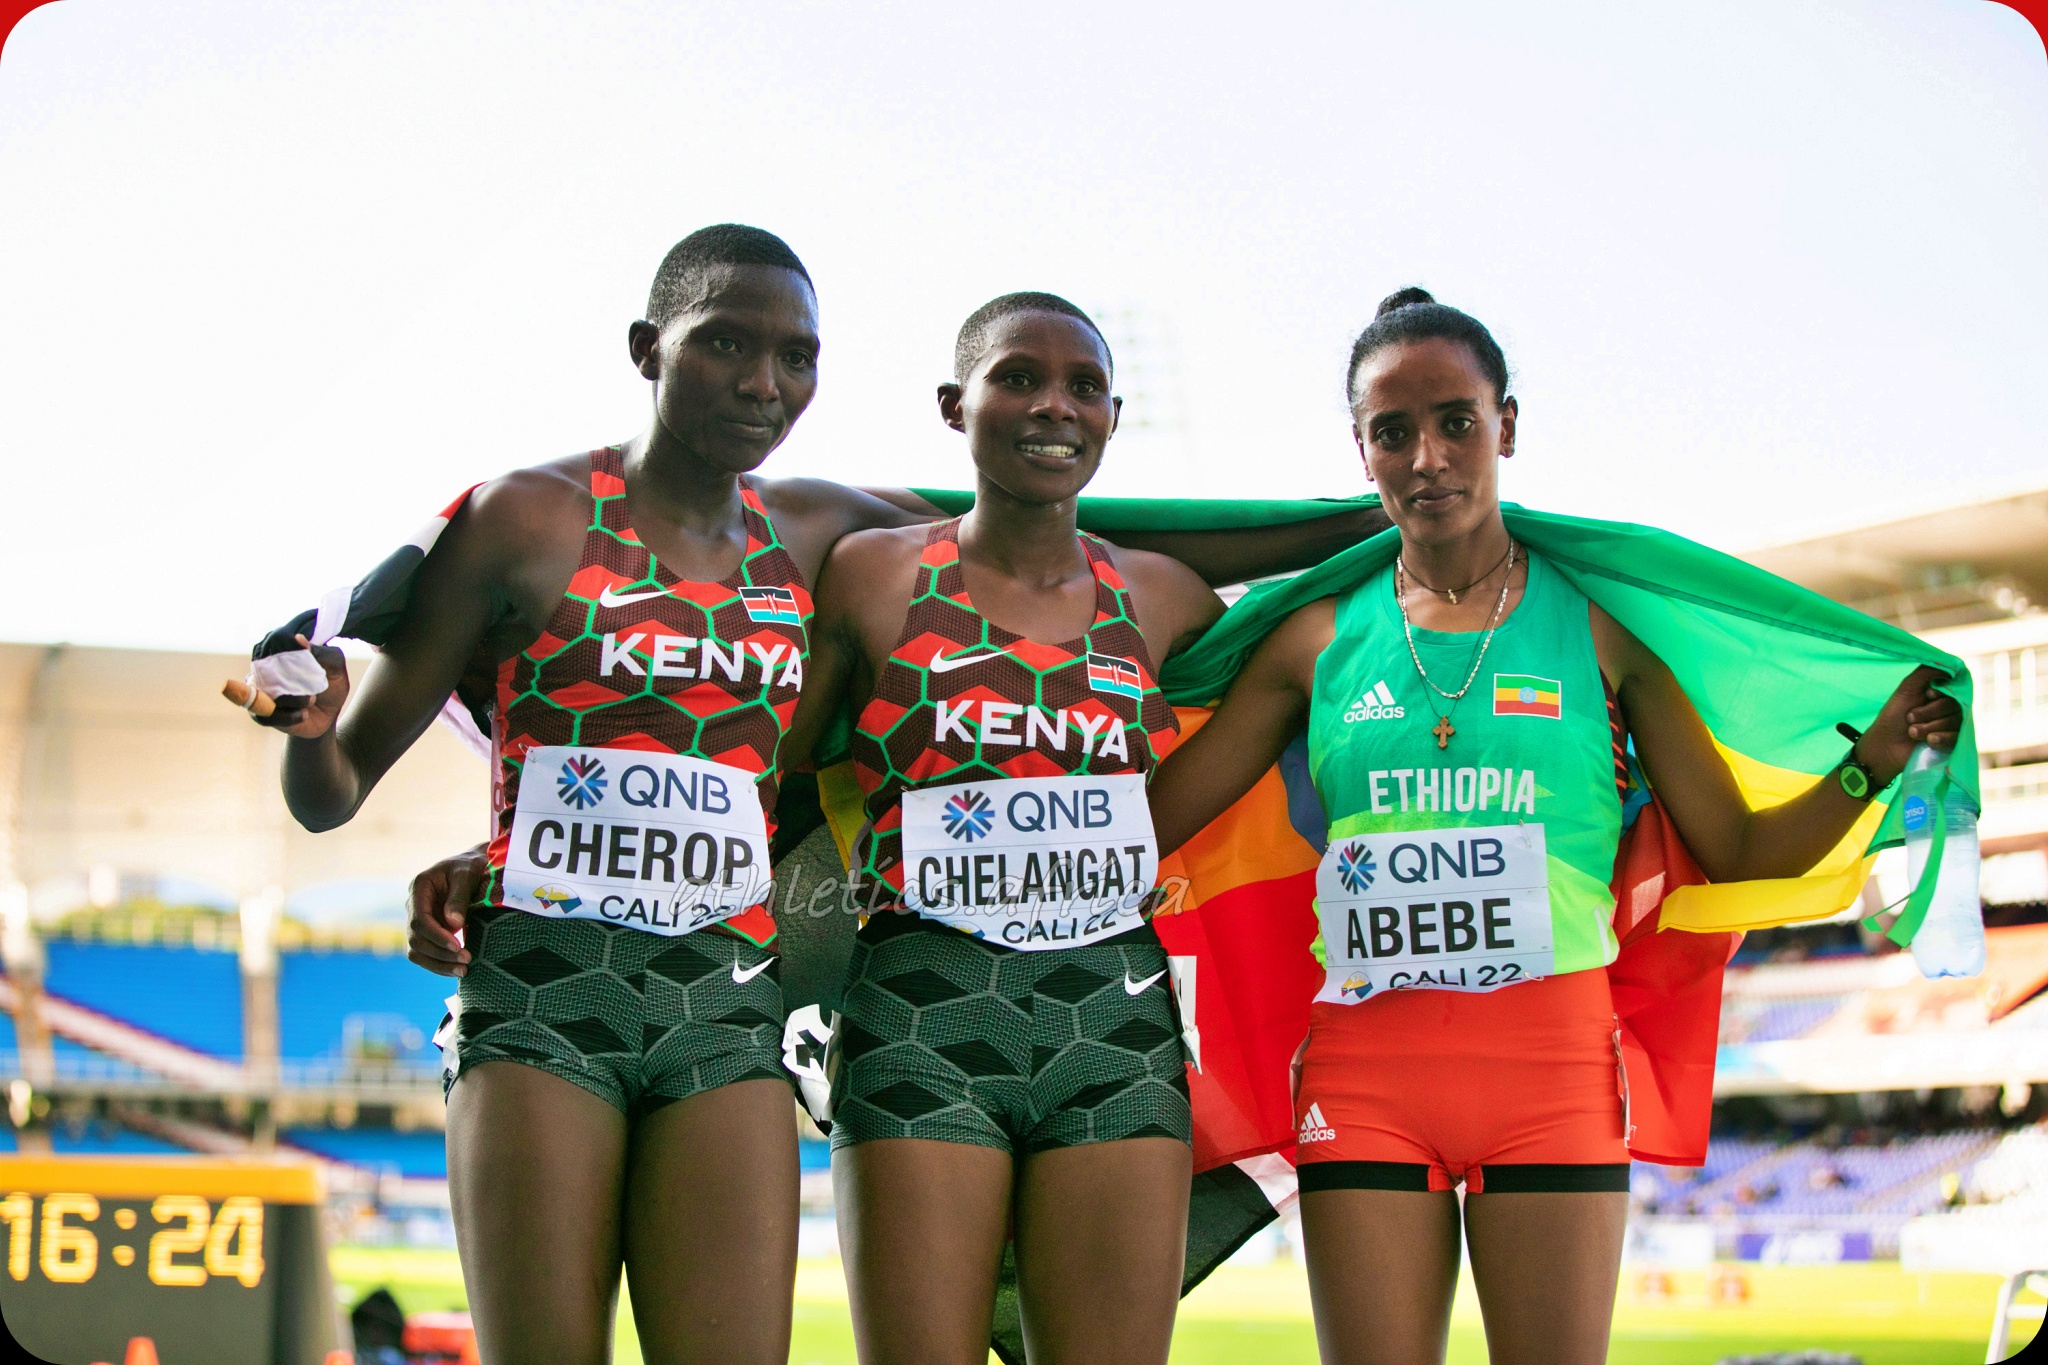 Kenya's Betty Chelangat, Ethiopia’s Tsiyon Abebe and Kenya’s Nancy Cherop on the podium after the women's 3000m medal presentation at the World Athletics U20 Championships Cali 22 / Photo credit: Marta Gorczynska for World Athletics